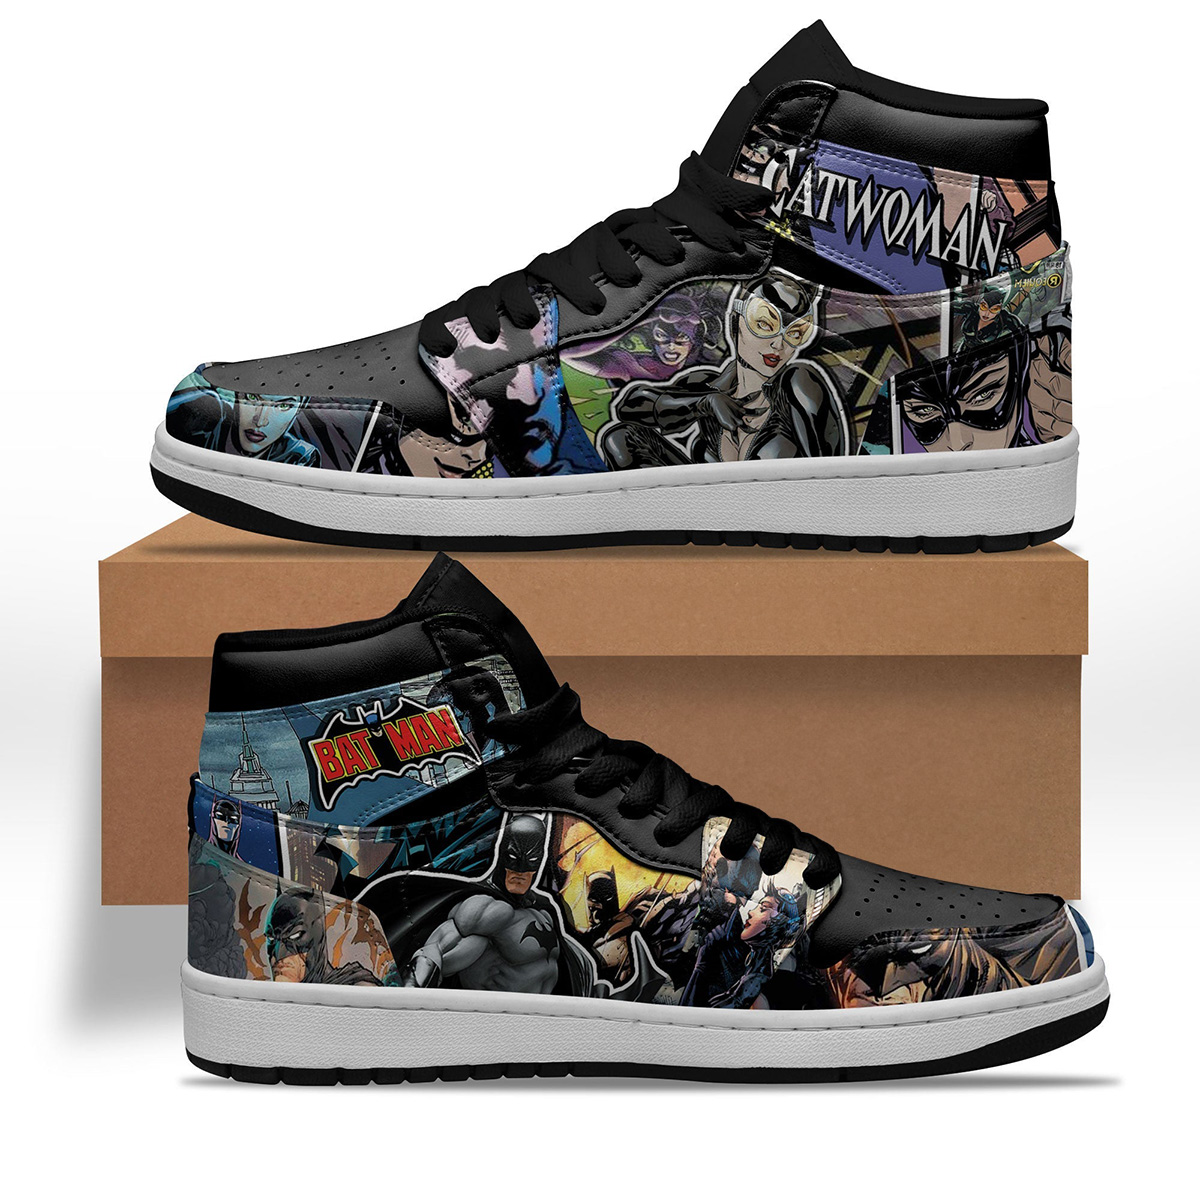 Batman Batman x Catwoman Shoes Custom